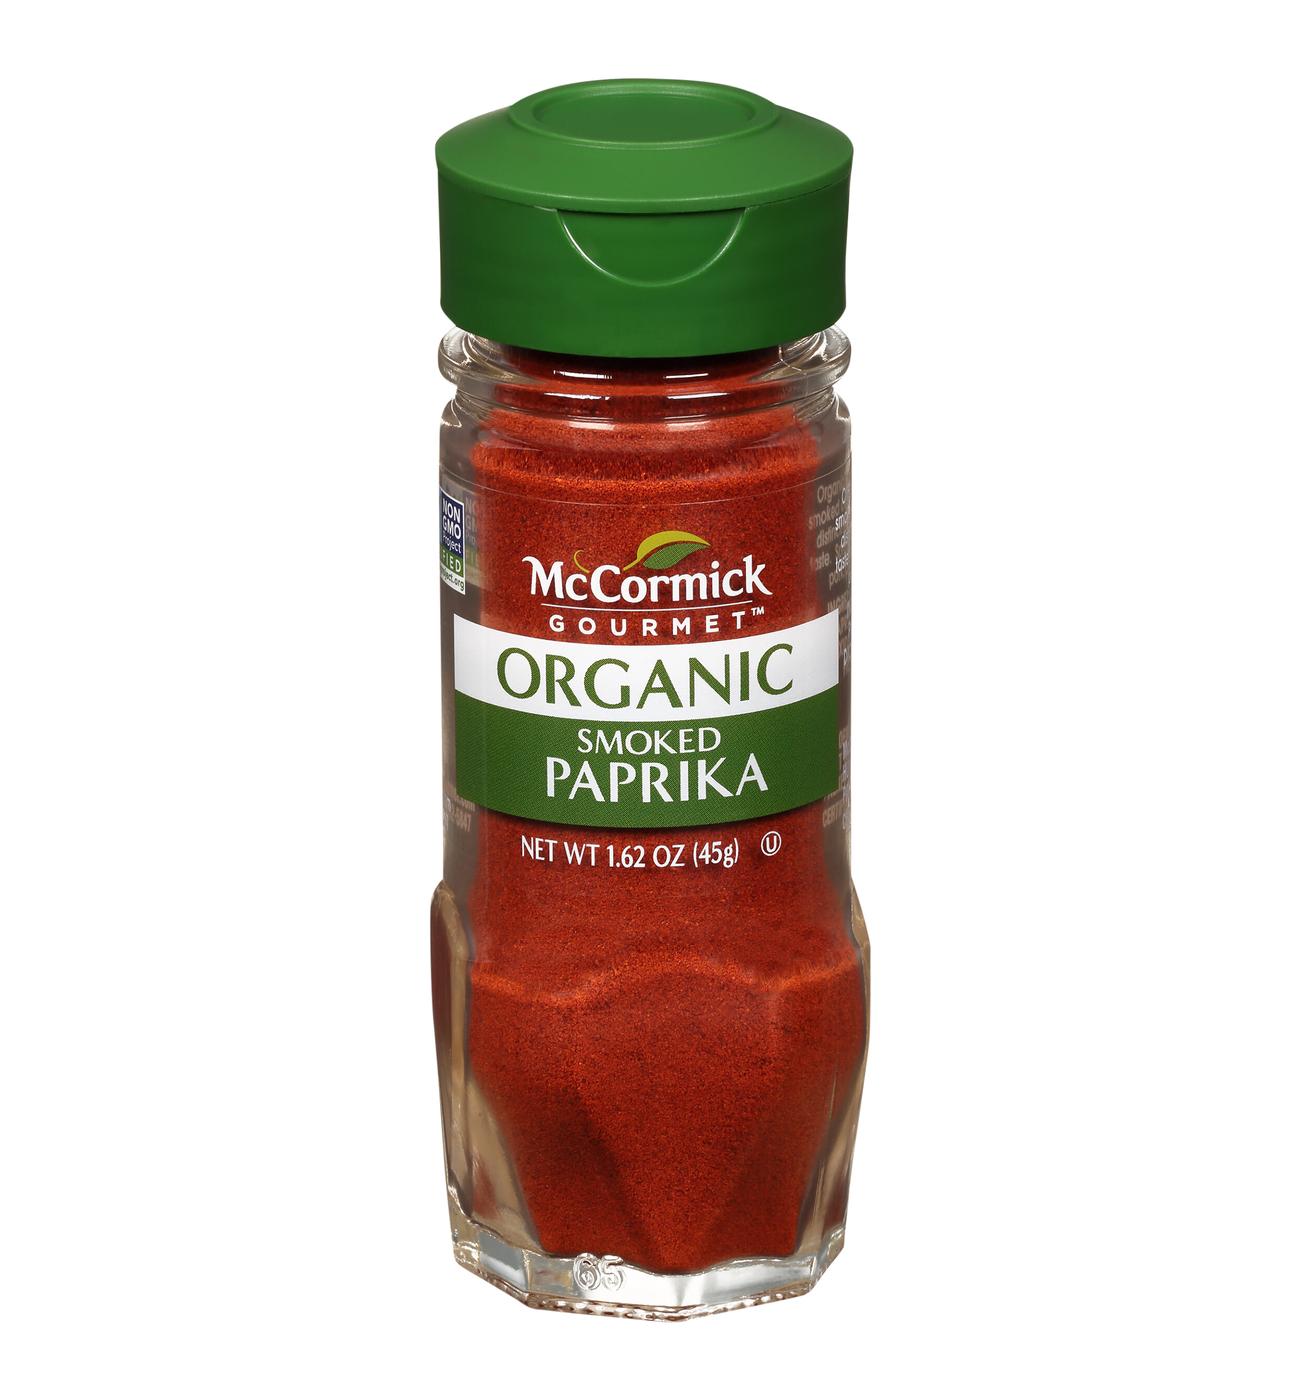 McCormick Gourmet Organic Smoked Paprika; image 1 of 5